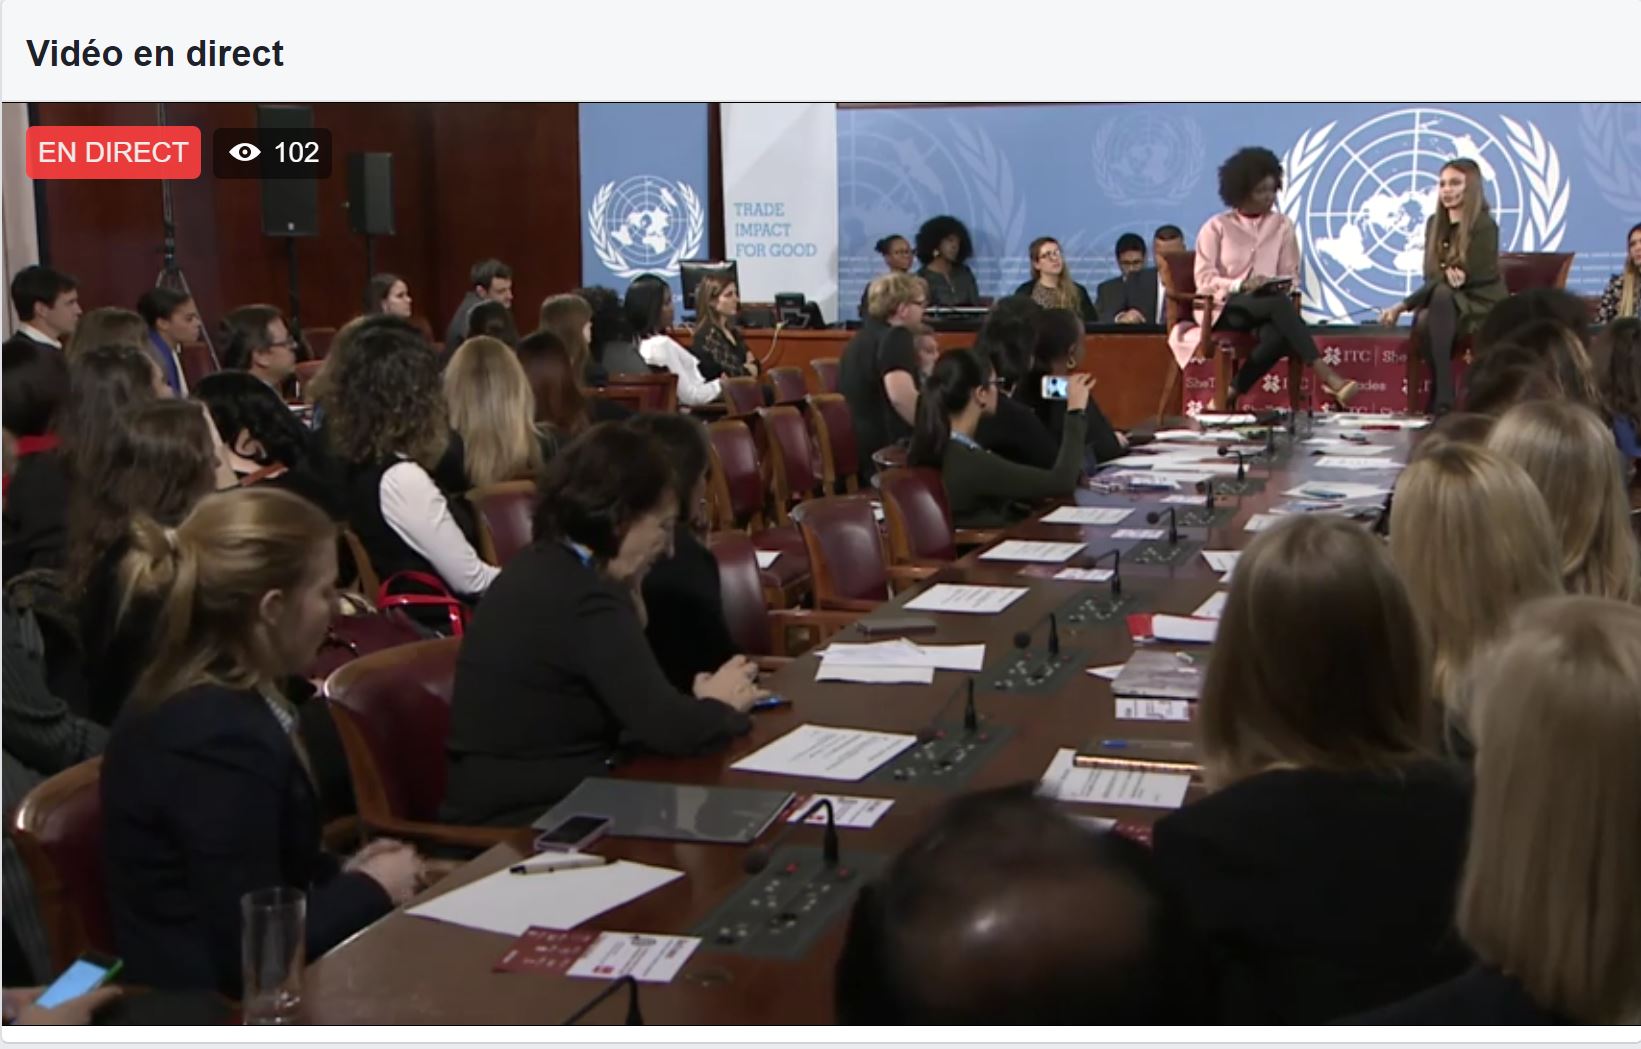 Xenia Tchoumi women and digital talk at the UN